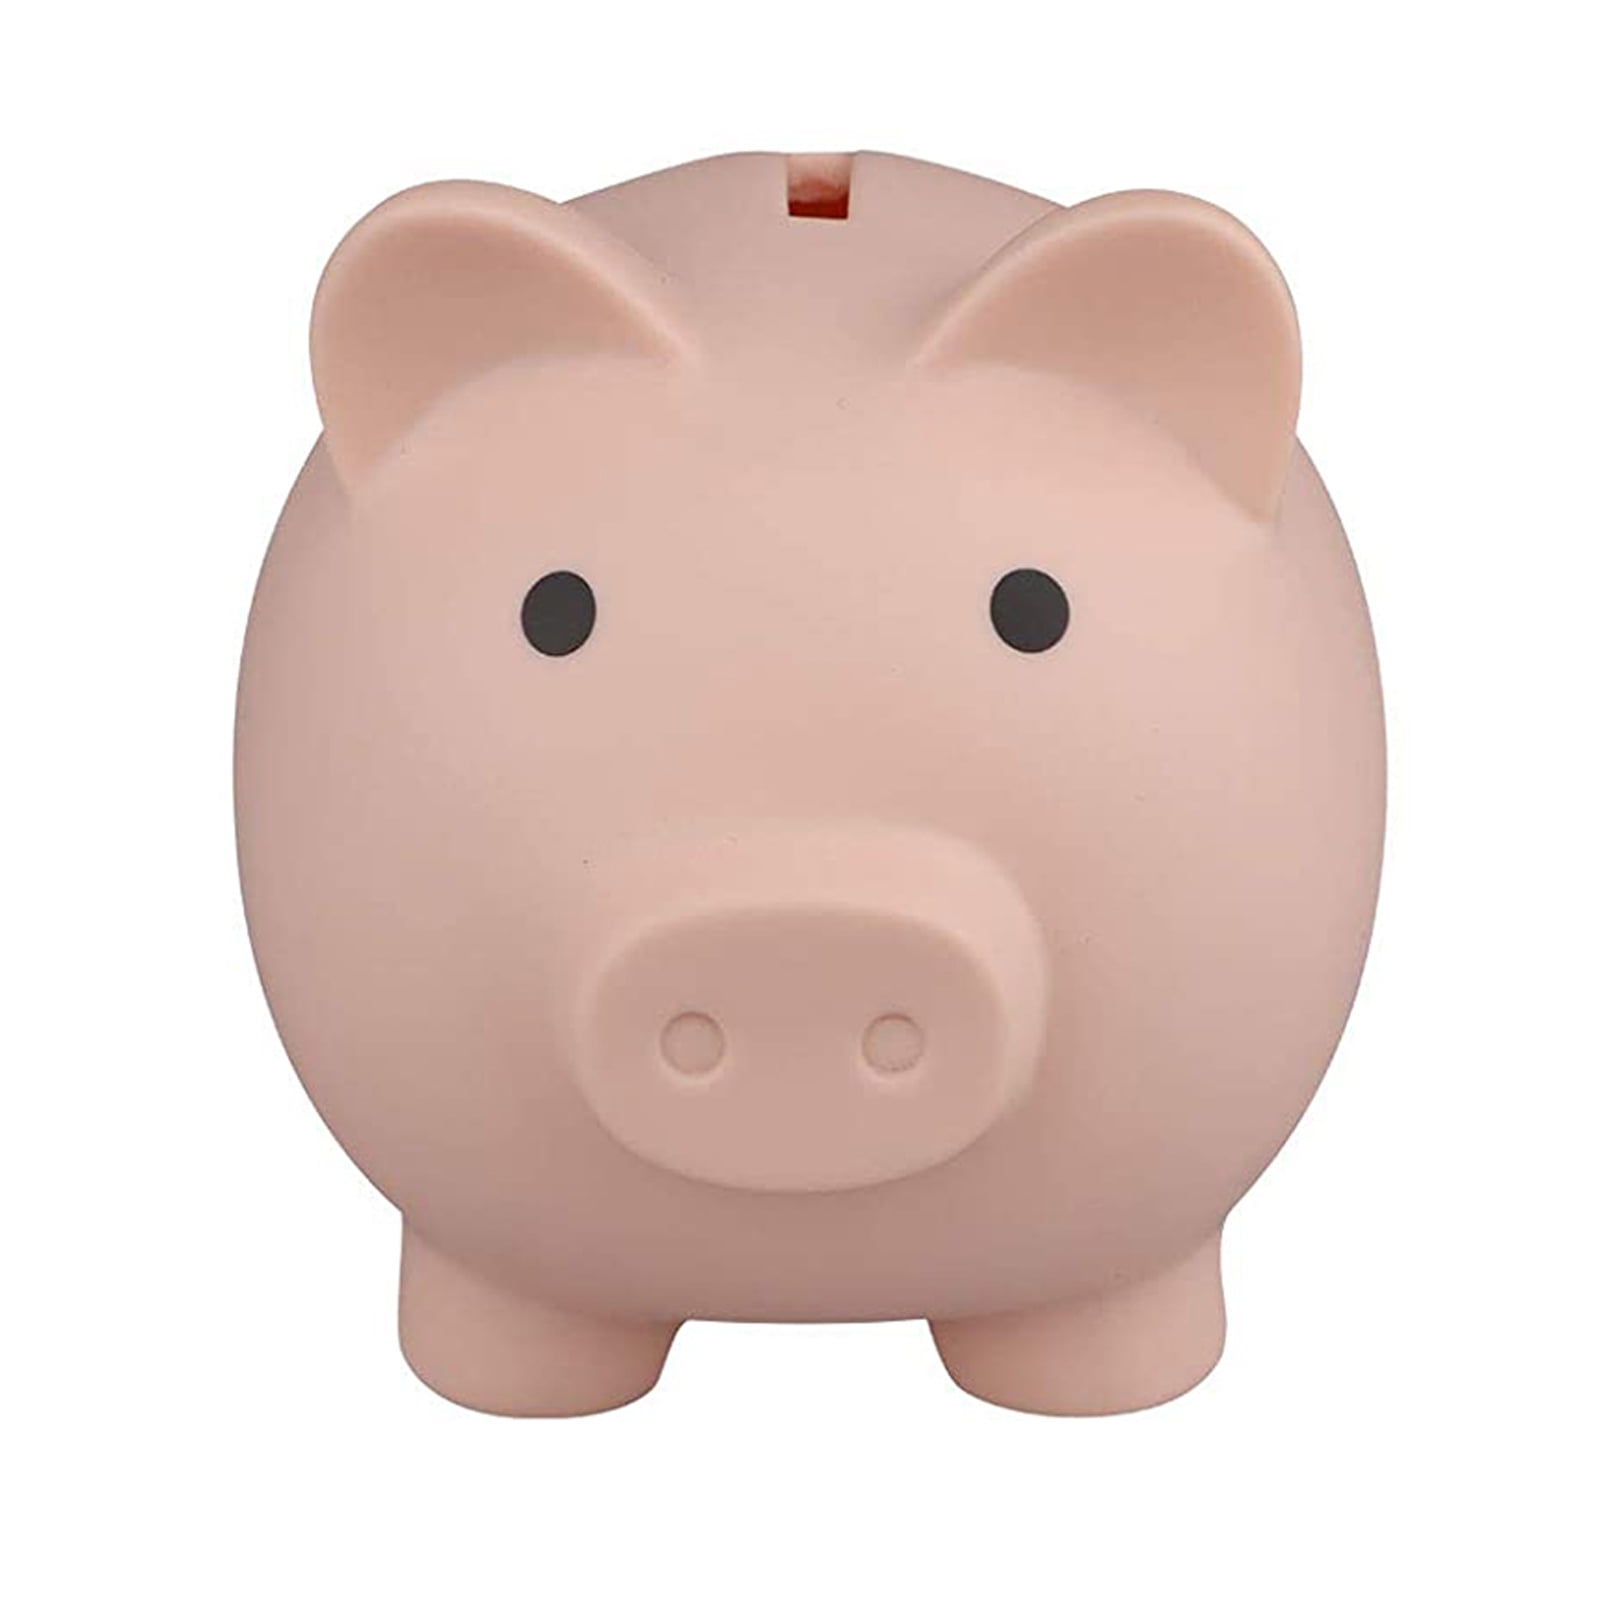 Funny Black Dog Stealing Eating Piggy Coin Saving Bank Home Decor Gift US Seller 